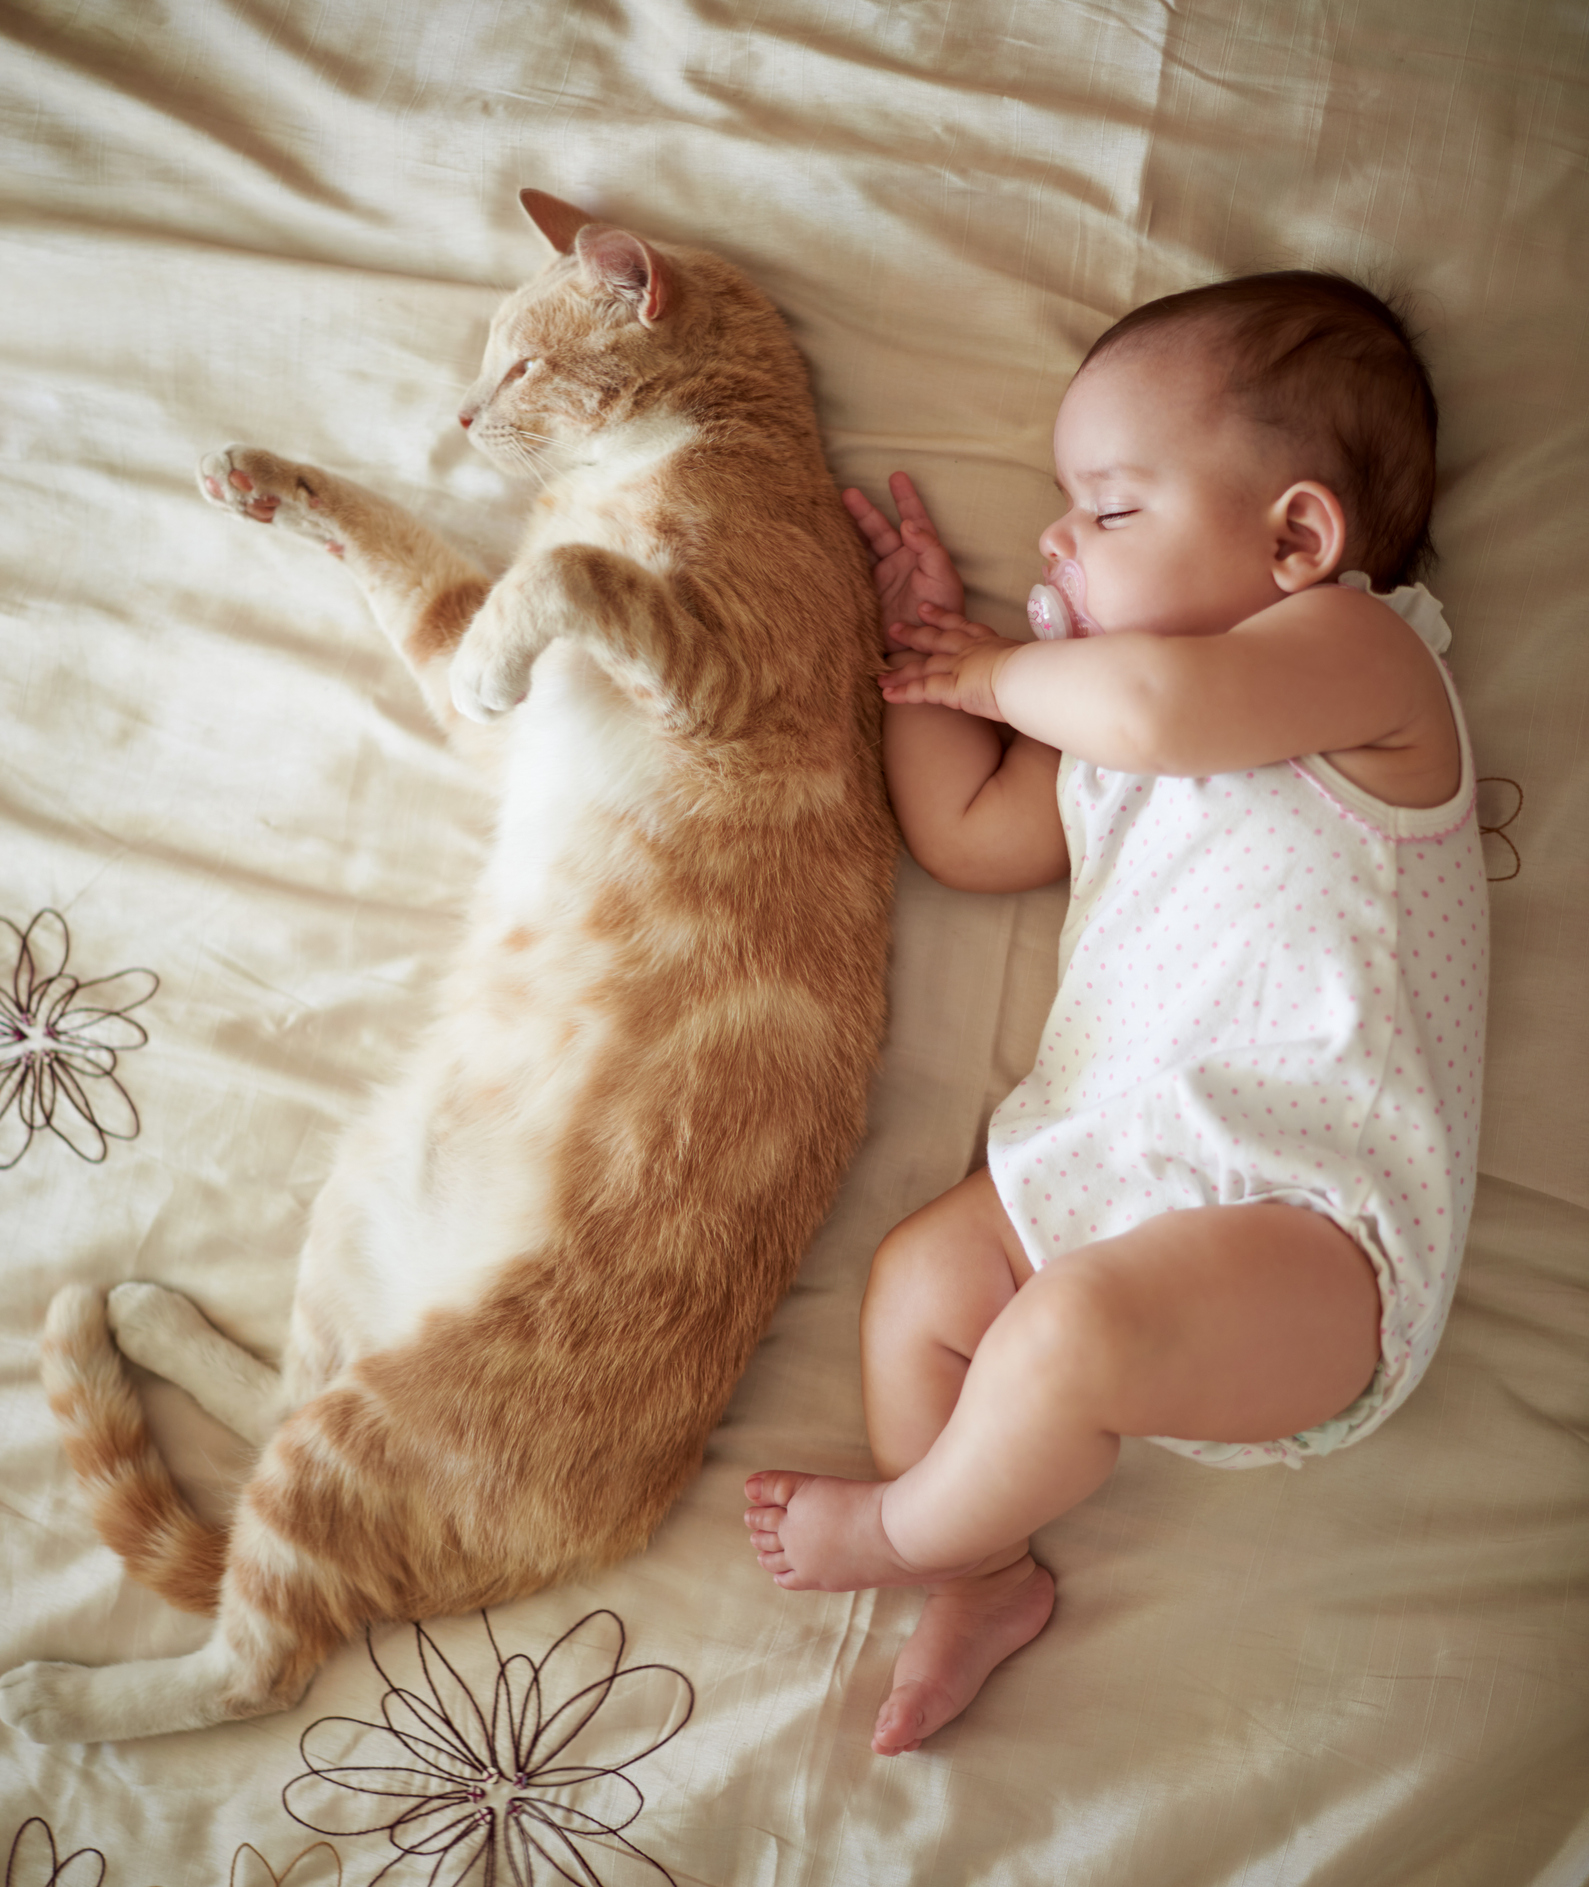 Фото №1 - Дружба с пеленок: 30 мимишных фото детей с их котиками